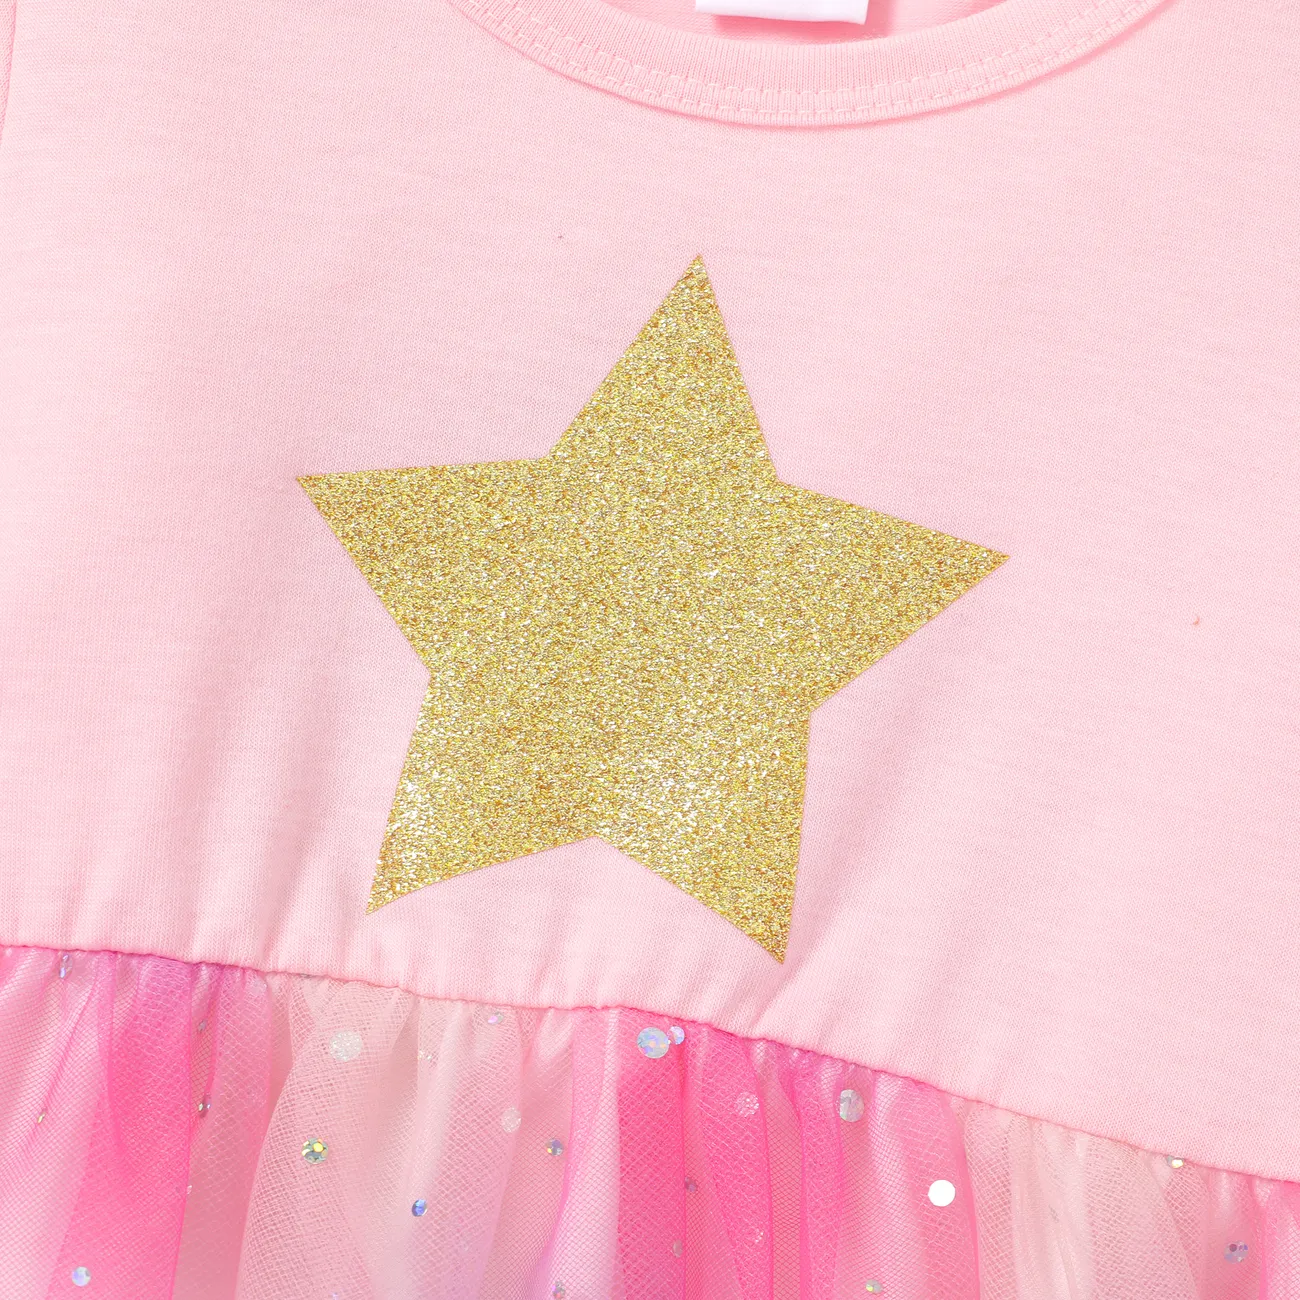 Sweet Toddler Girl Mesh Dress - Multi-Layered Stars/Moon/Clouds Print - Long Sleeve - Set of 1  Pink big image 1